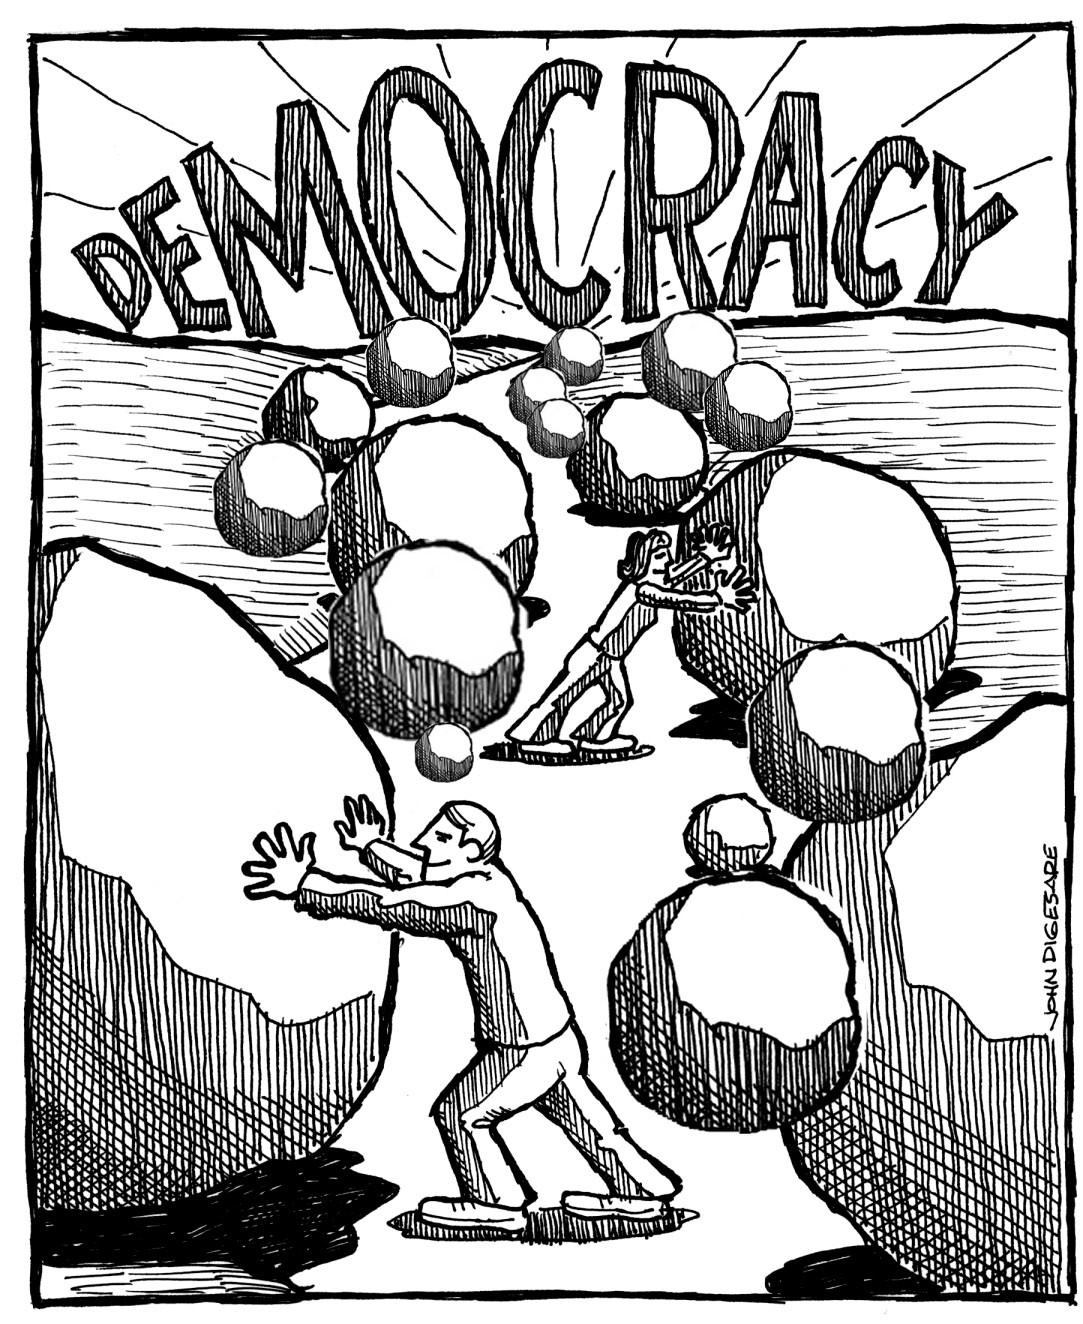 early democracy